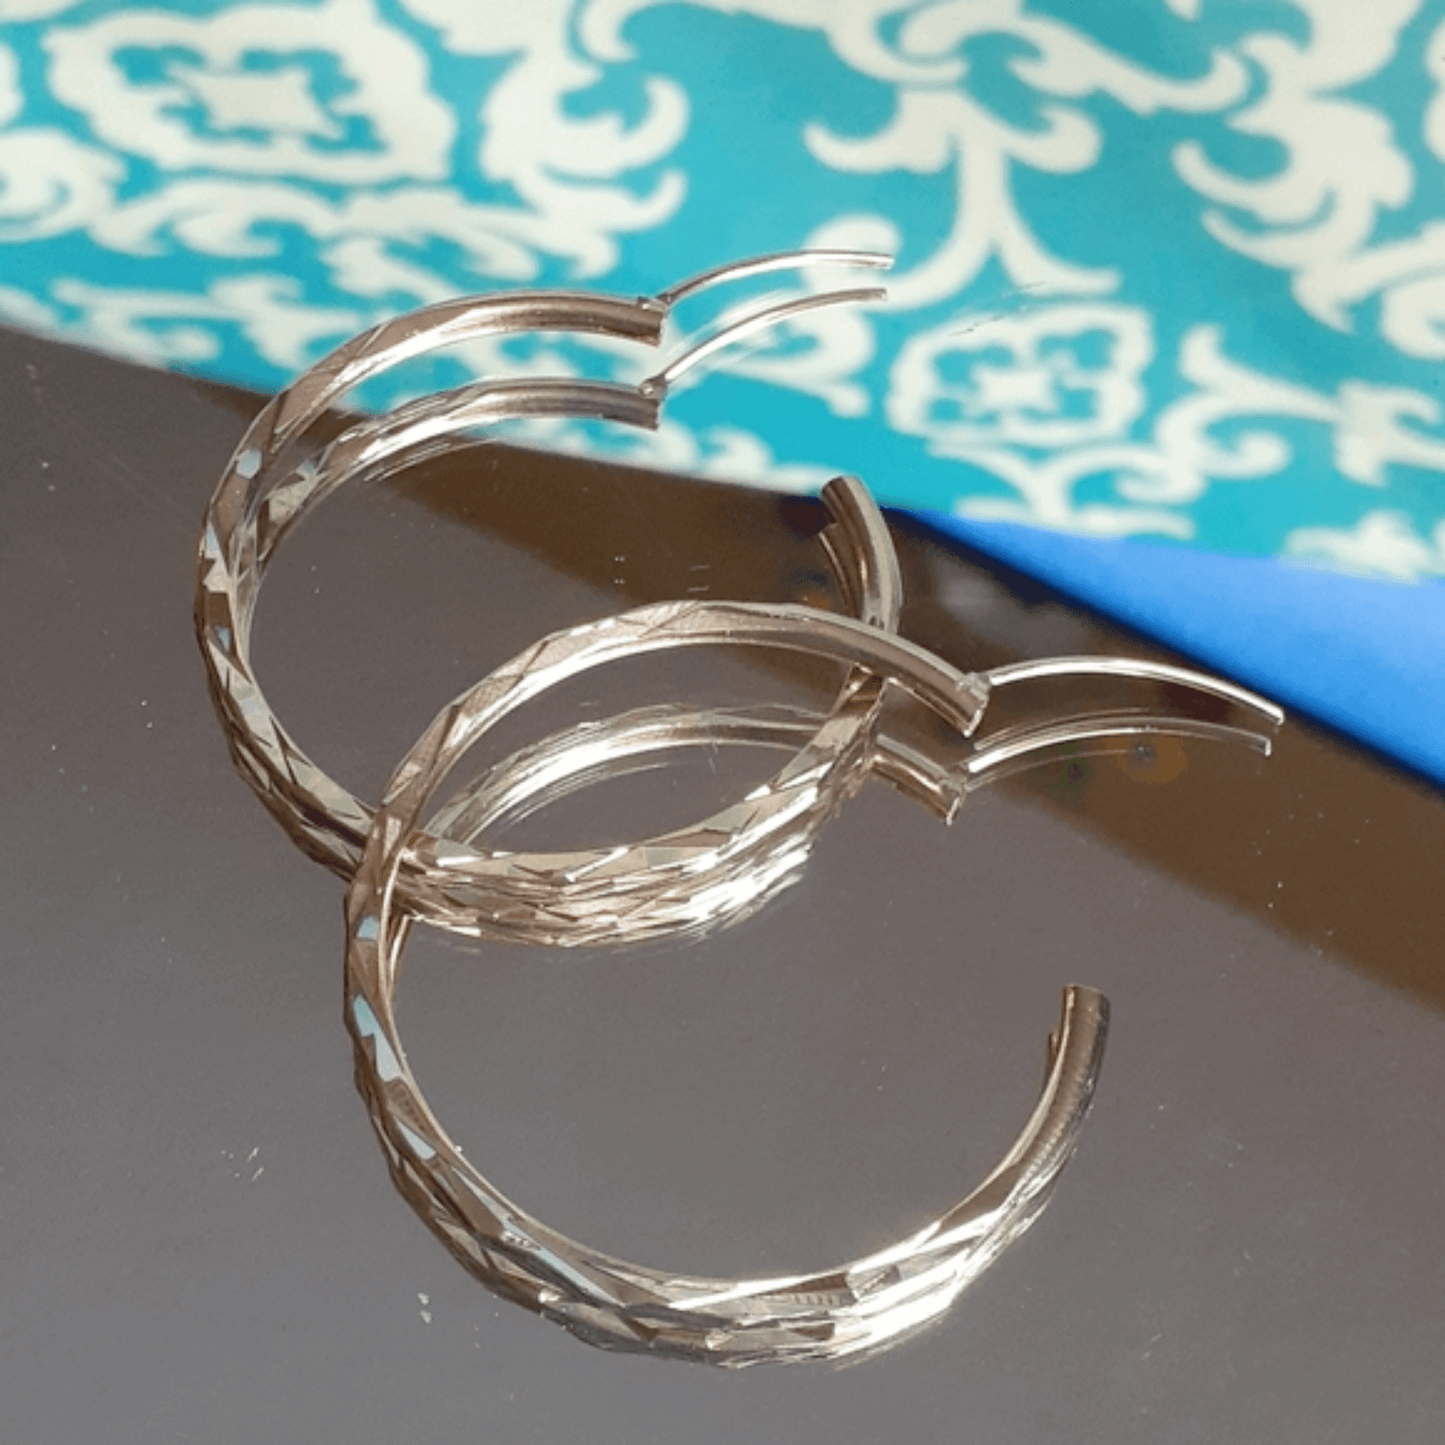 18k Gold Hoop Earrings Retro Abstract Design